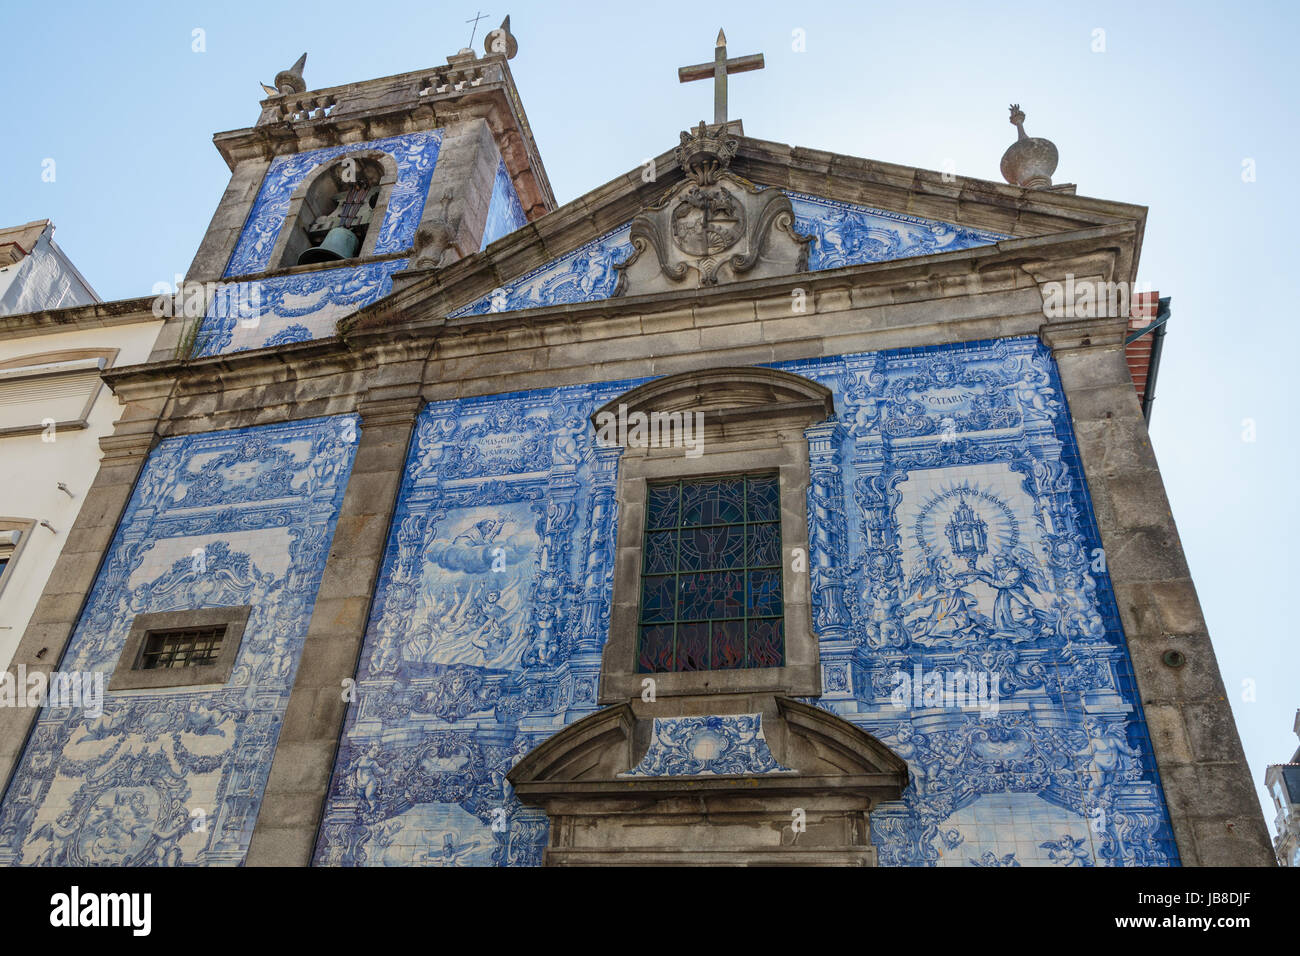 Capela das Almas dekoriert mit Azulejo Kacheln - Capela de Santa Catarina in Porto, Portugal Stockfoto